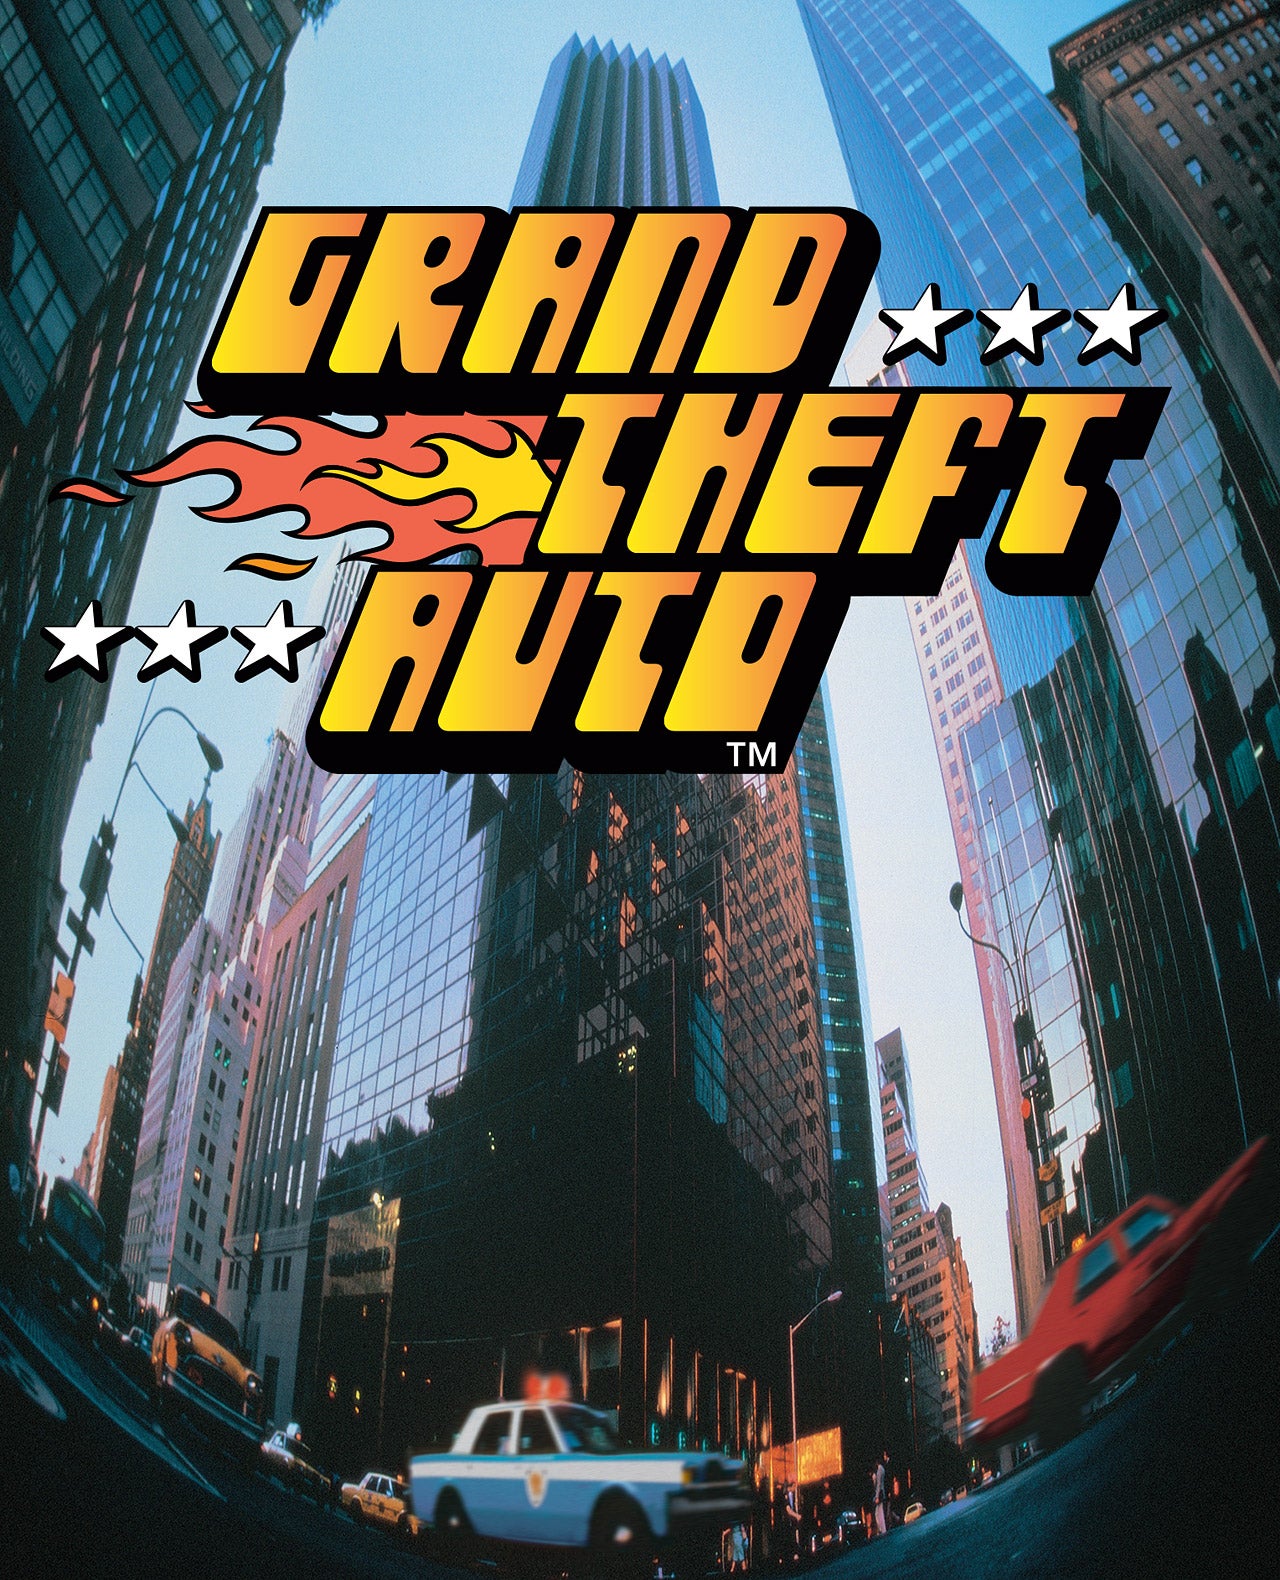 GTA GRAND THEFT AUTO